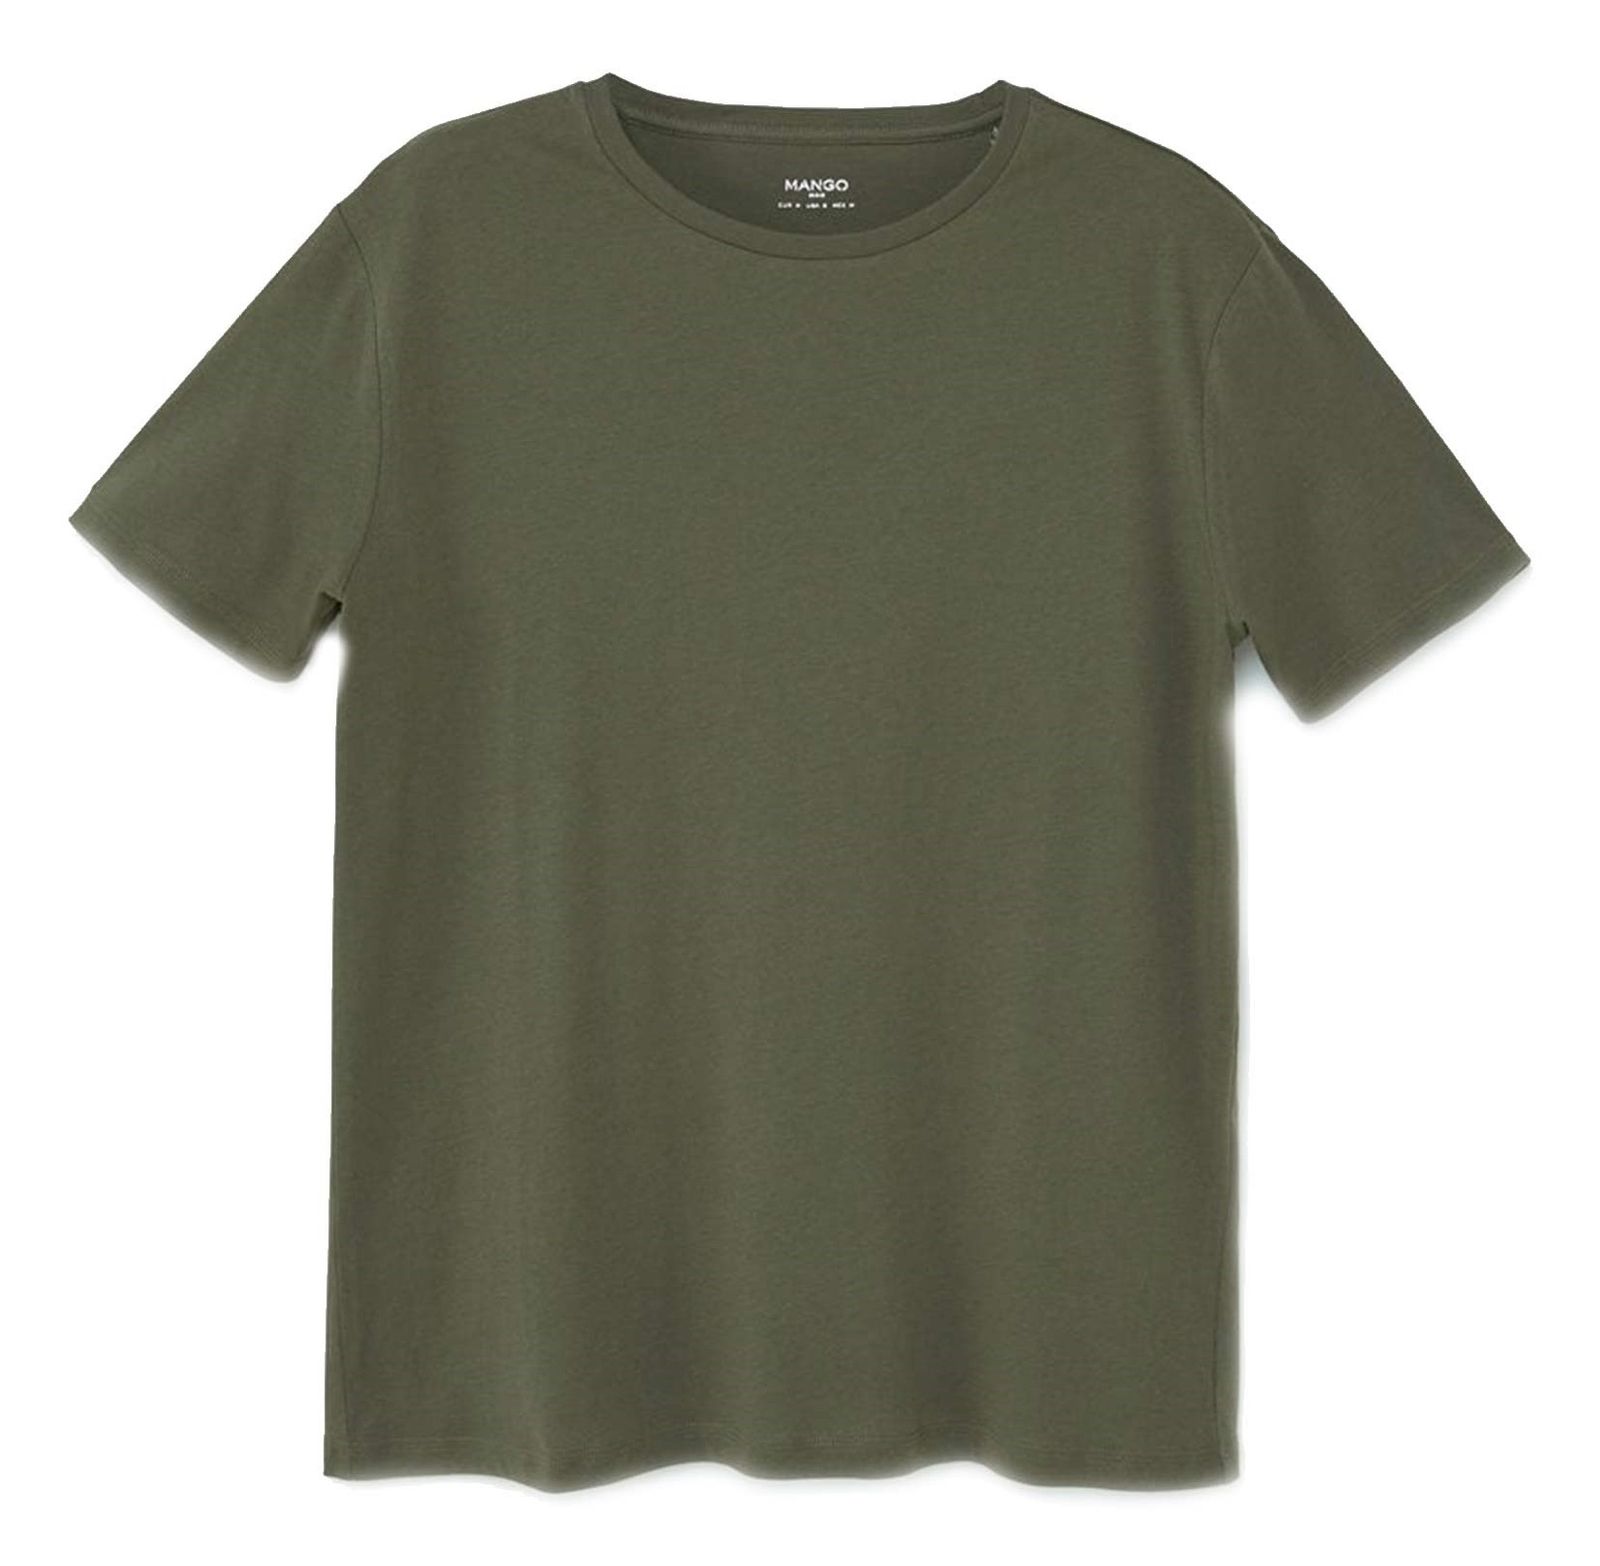 تی شرت نخی یقه گرد مردانه - مانگو - زيتوني - 2